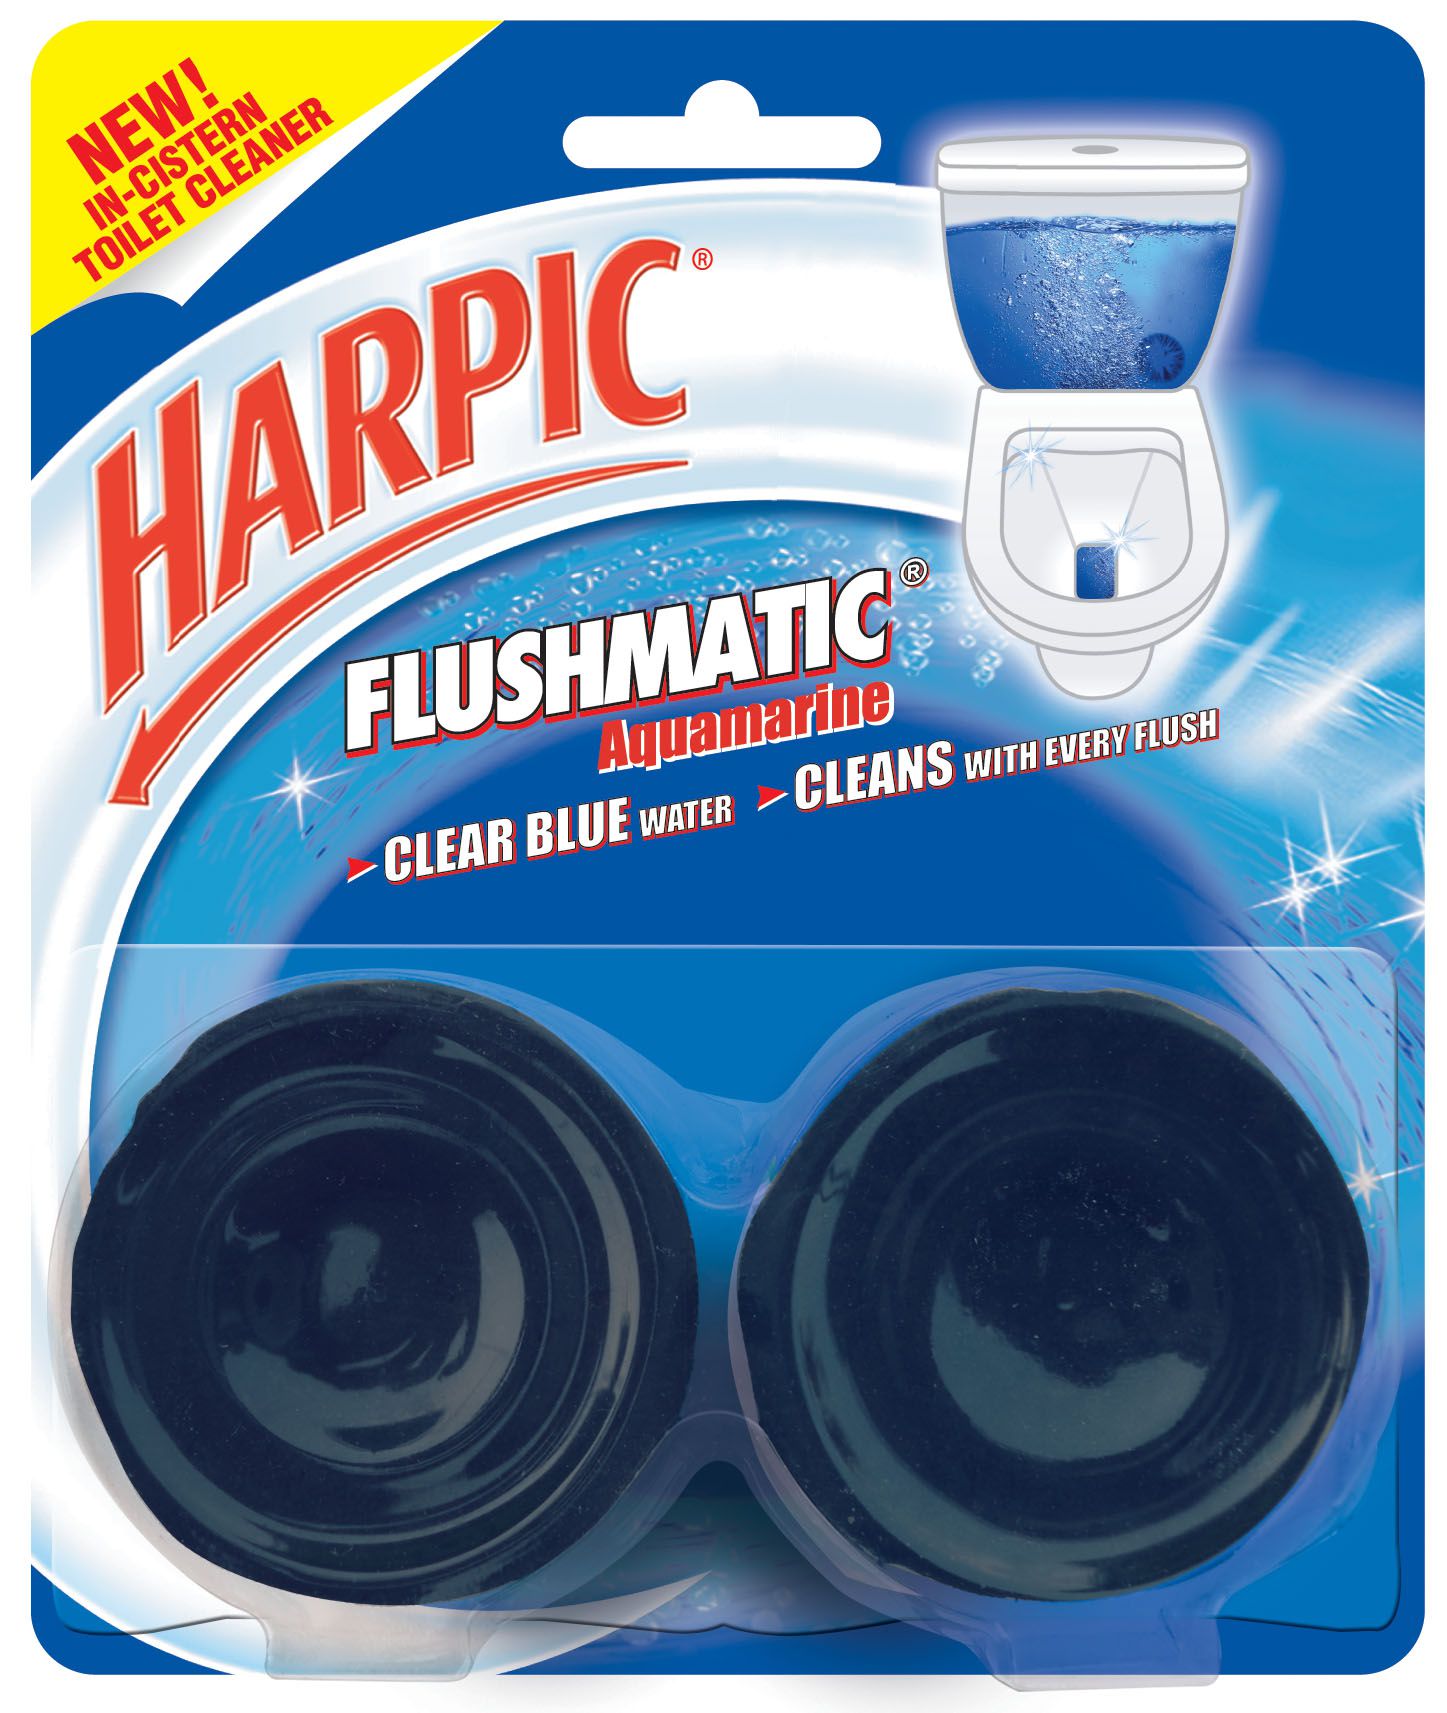 Harpic Flushmatic